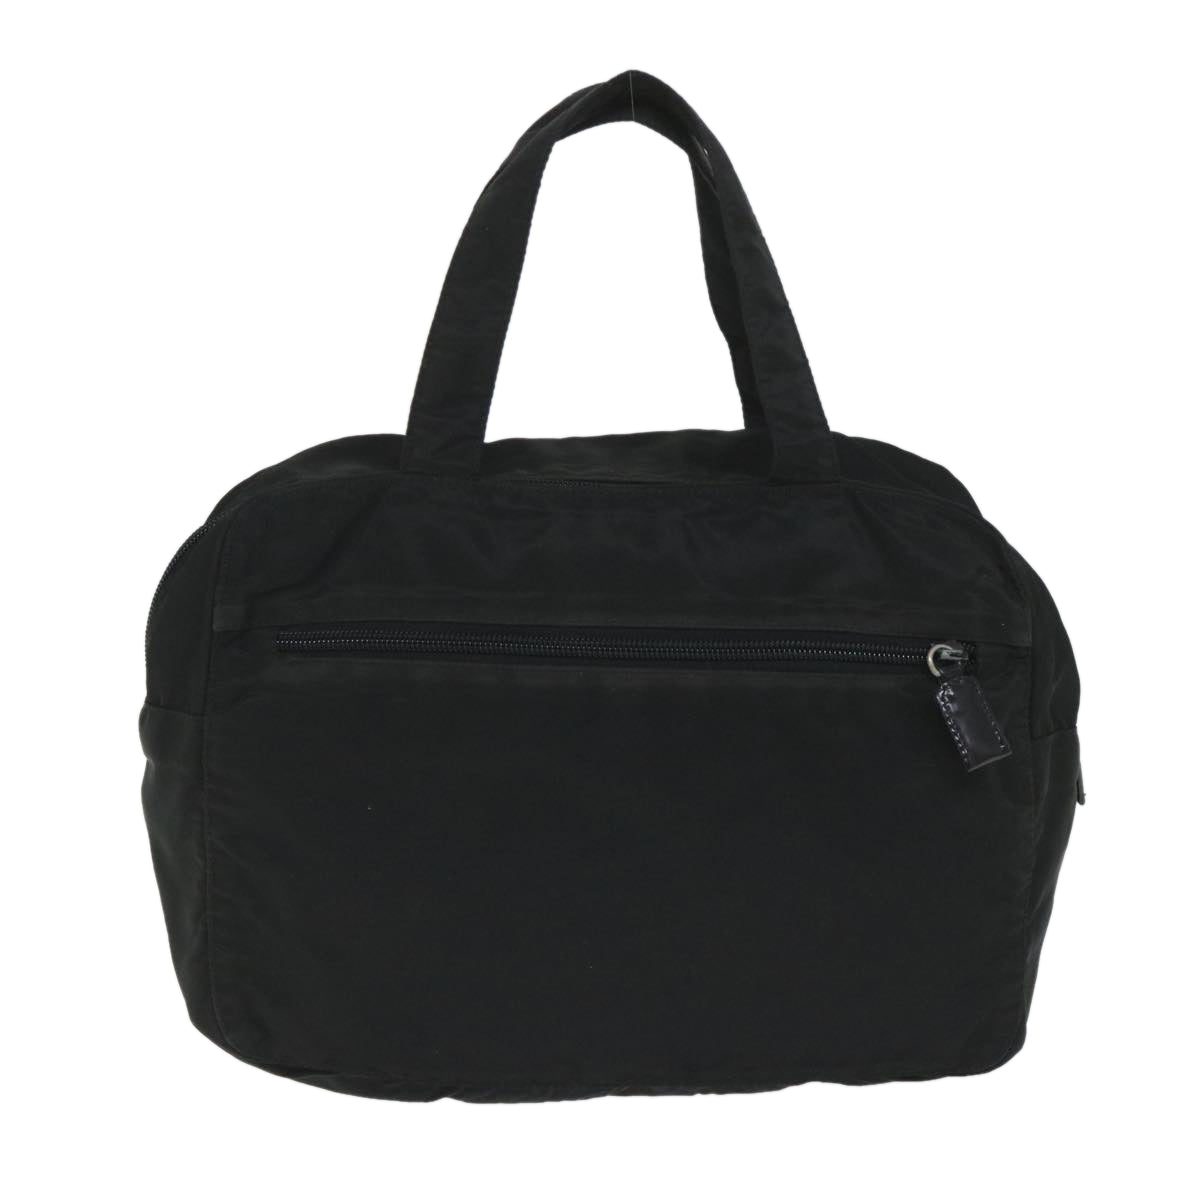 PRADA Hand Bag Nylon Black Auth ac2391